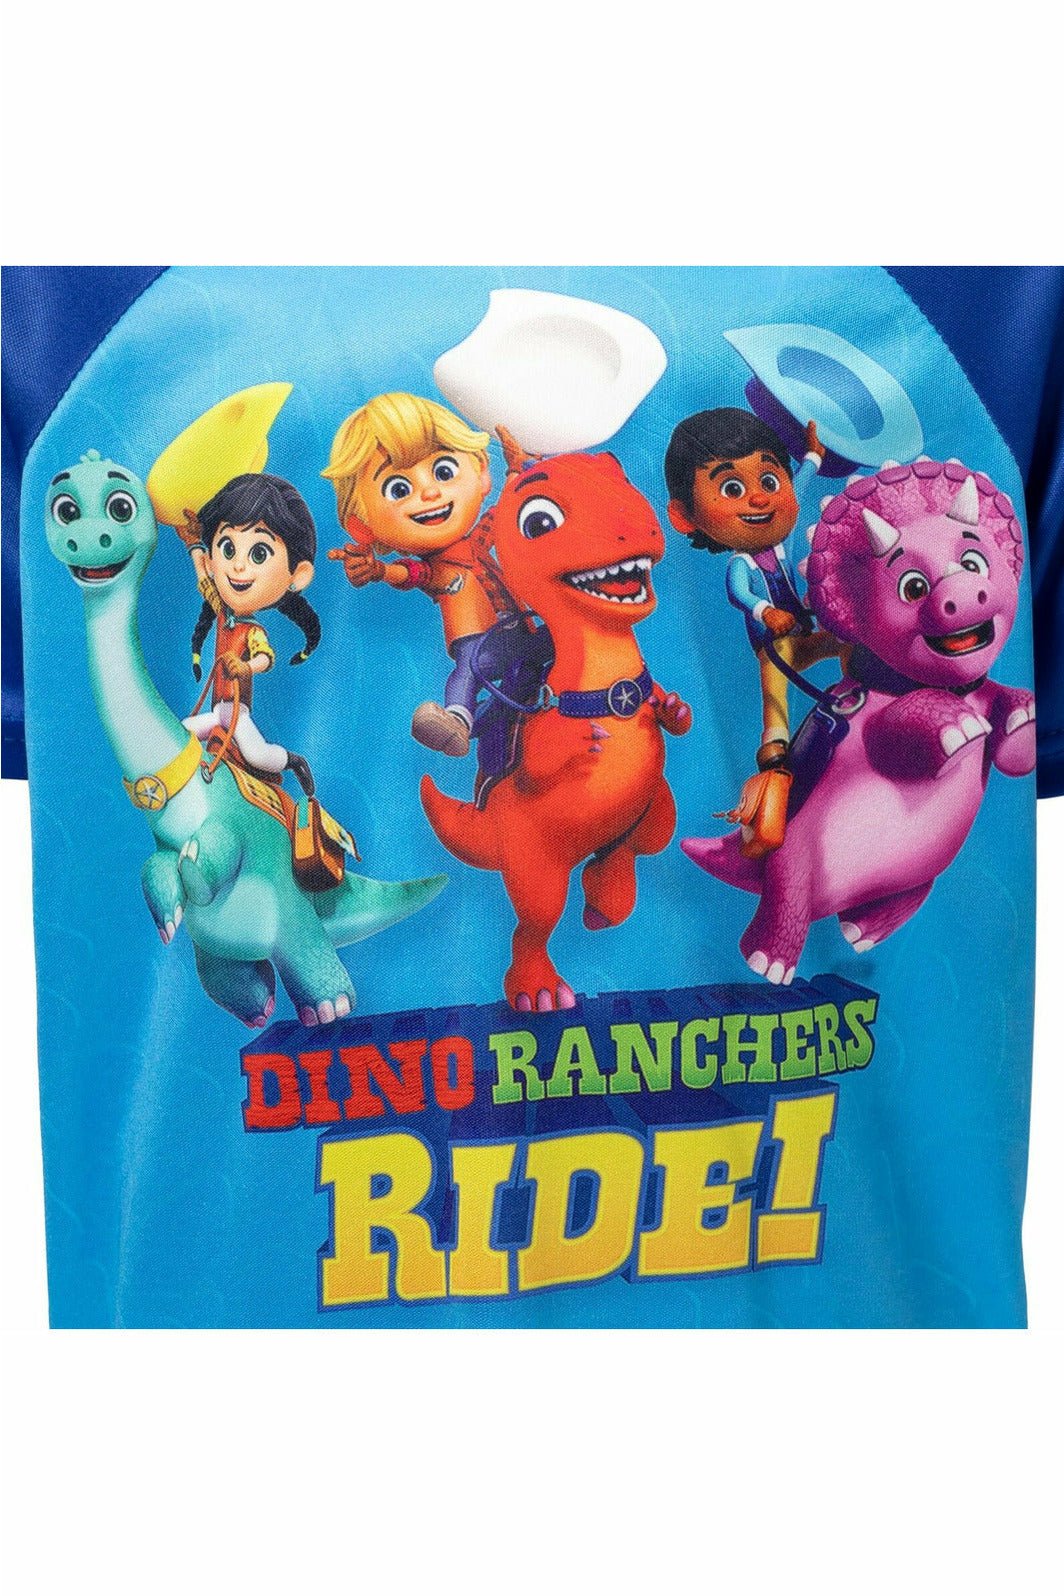 Dino Ranch Mesh Raglan Graphic T-Shirt & Shorts - imagikids